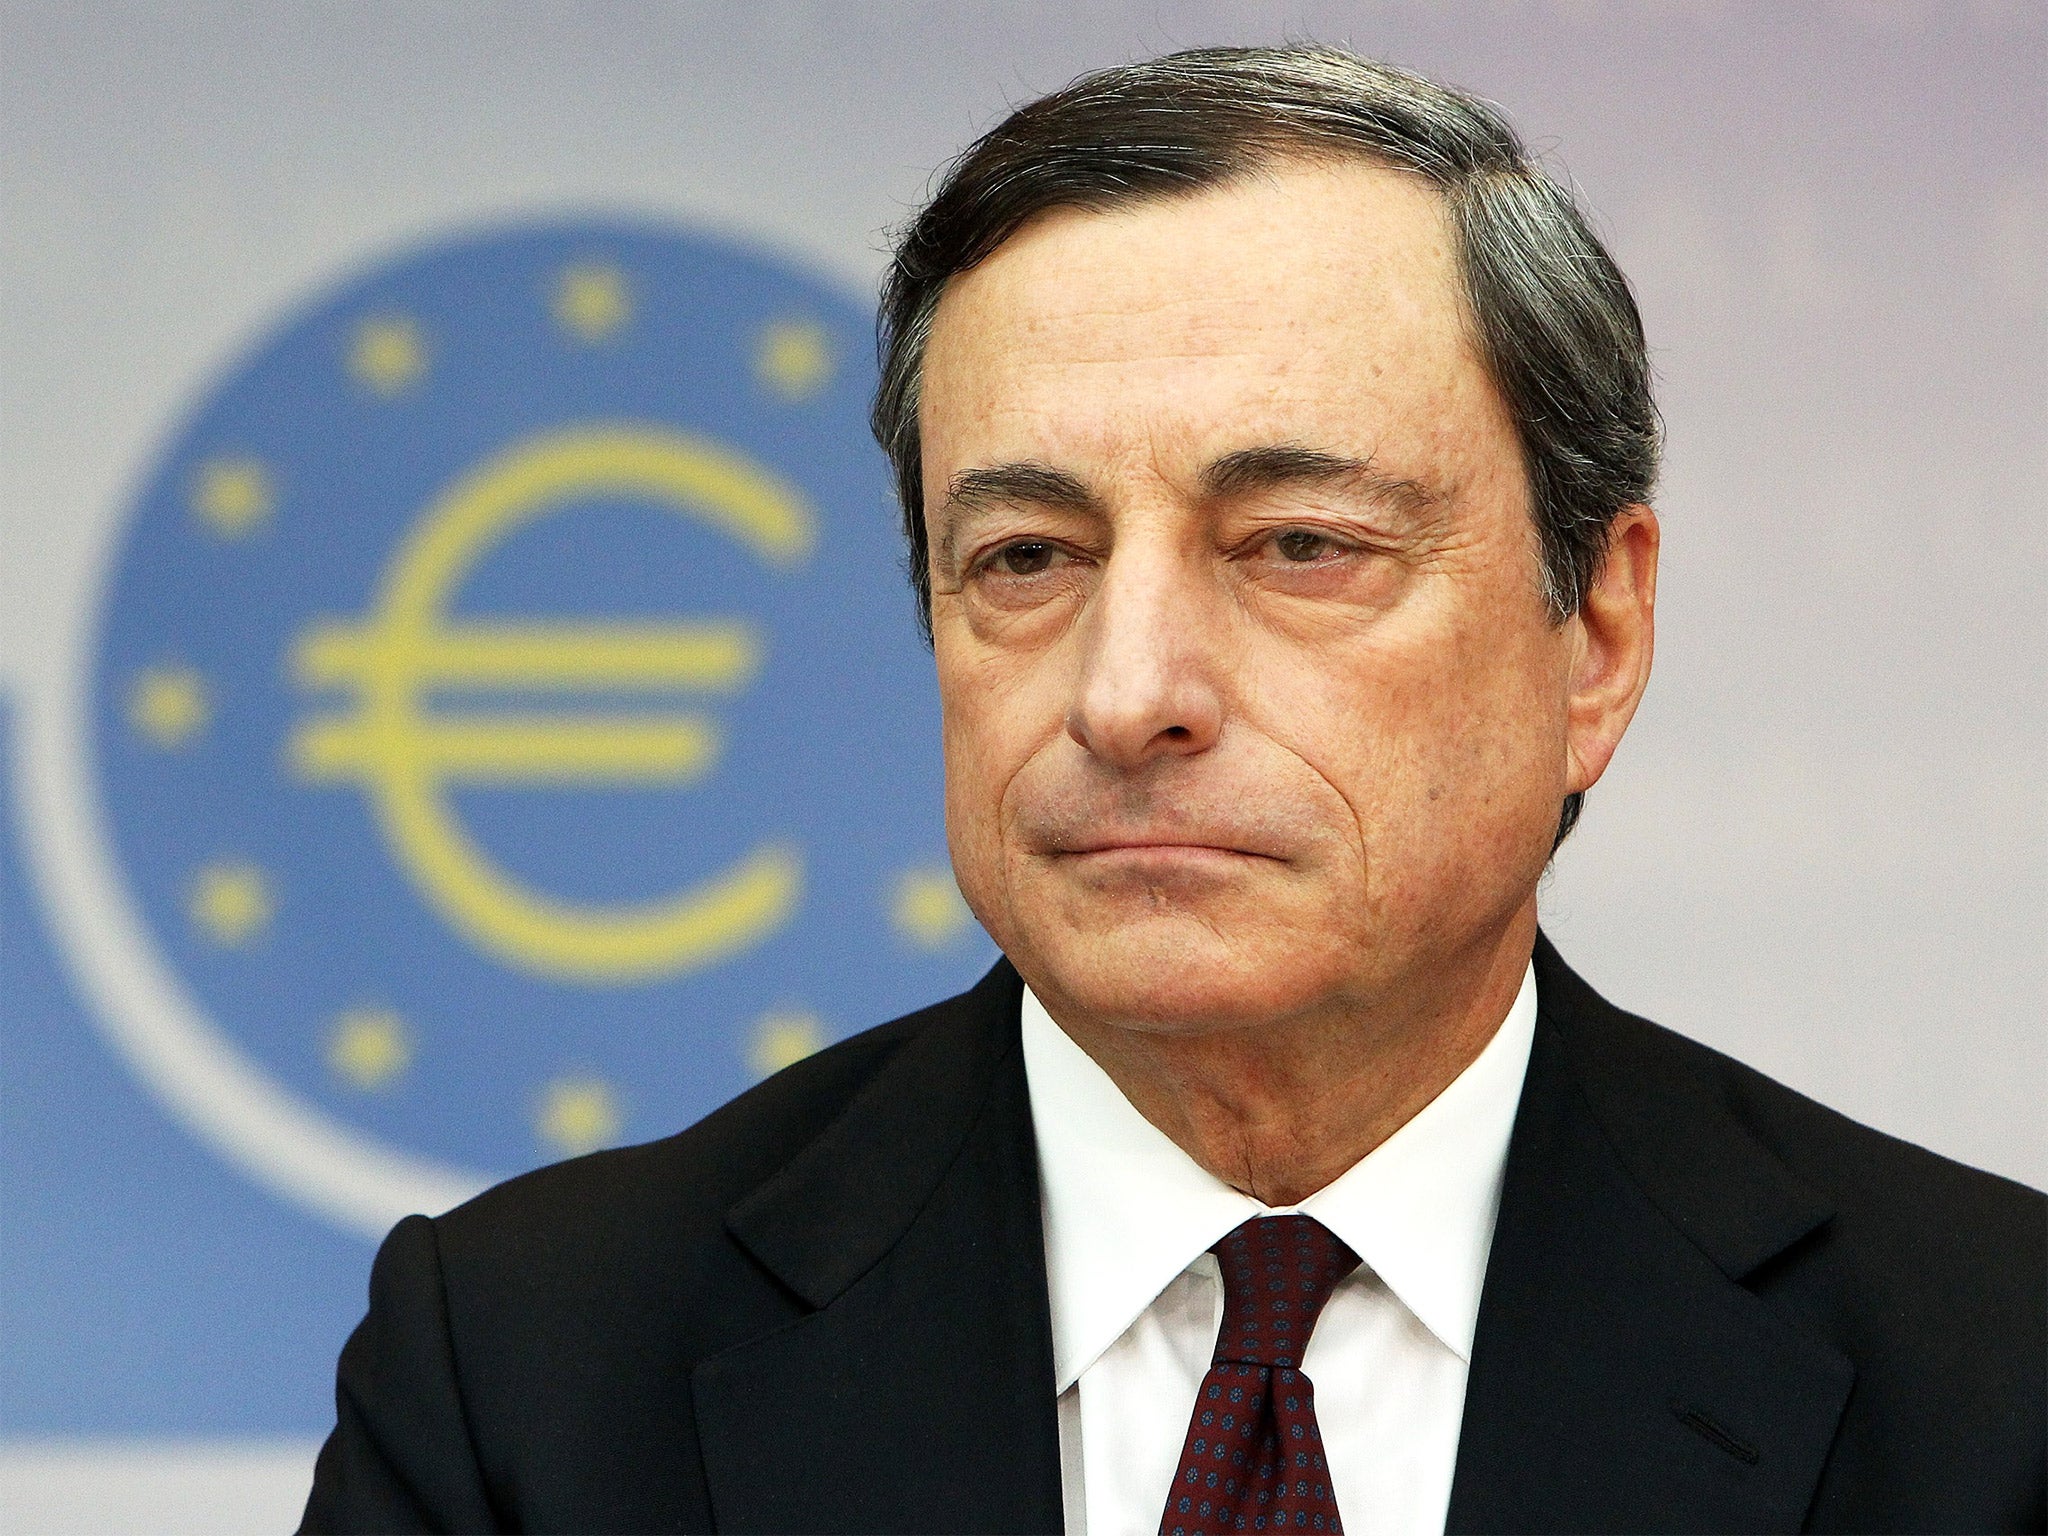 ECB boss Mario Draghi